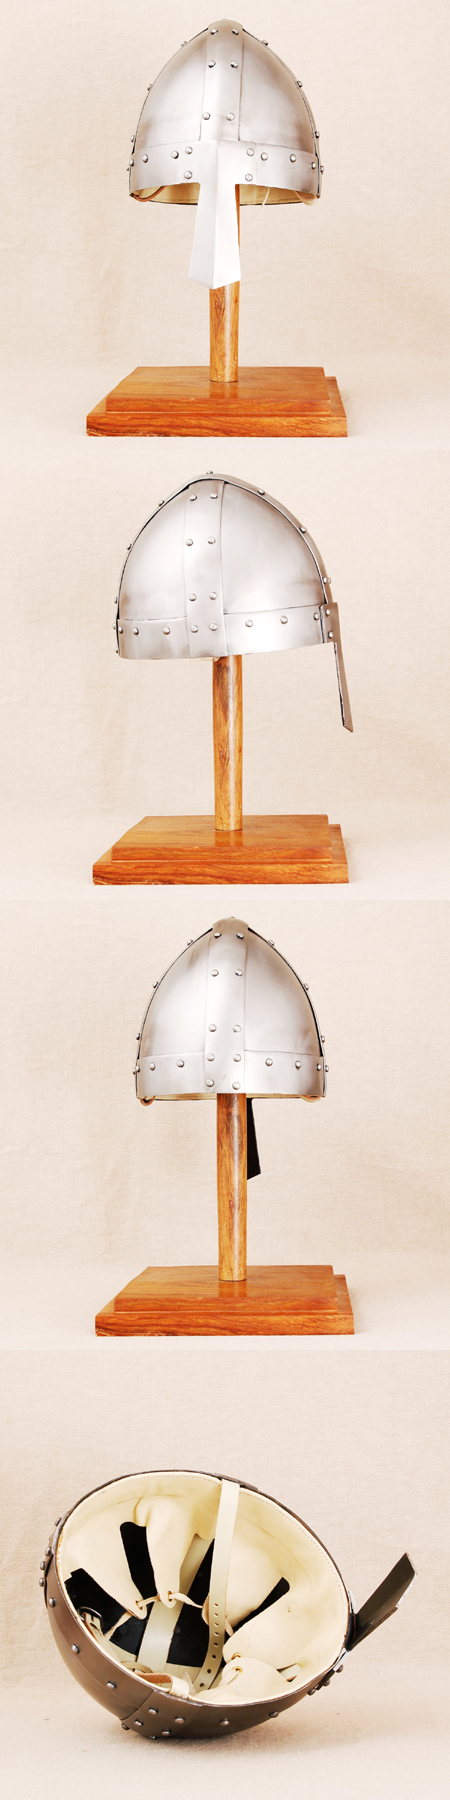 Strong Viking helmet 900 AD - reenactment